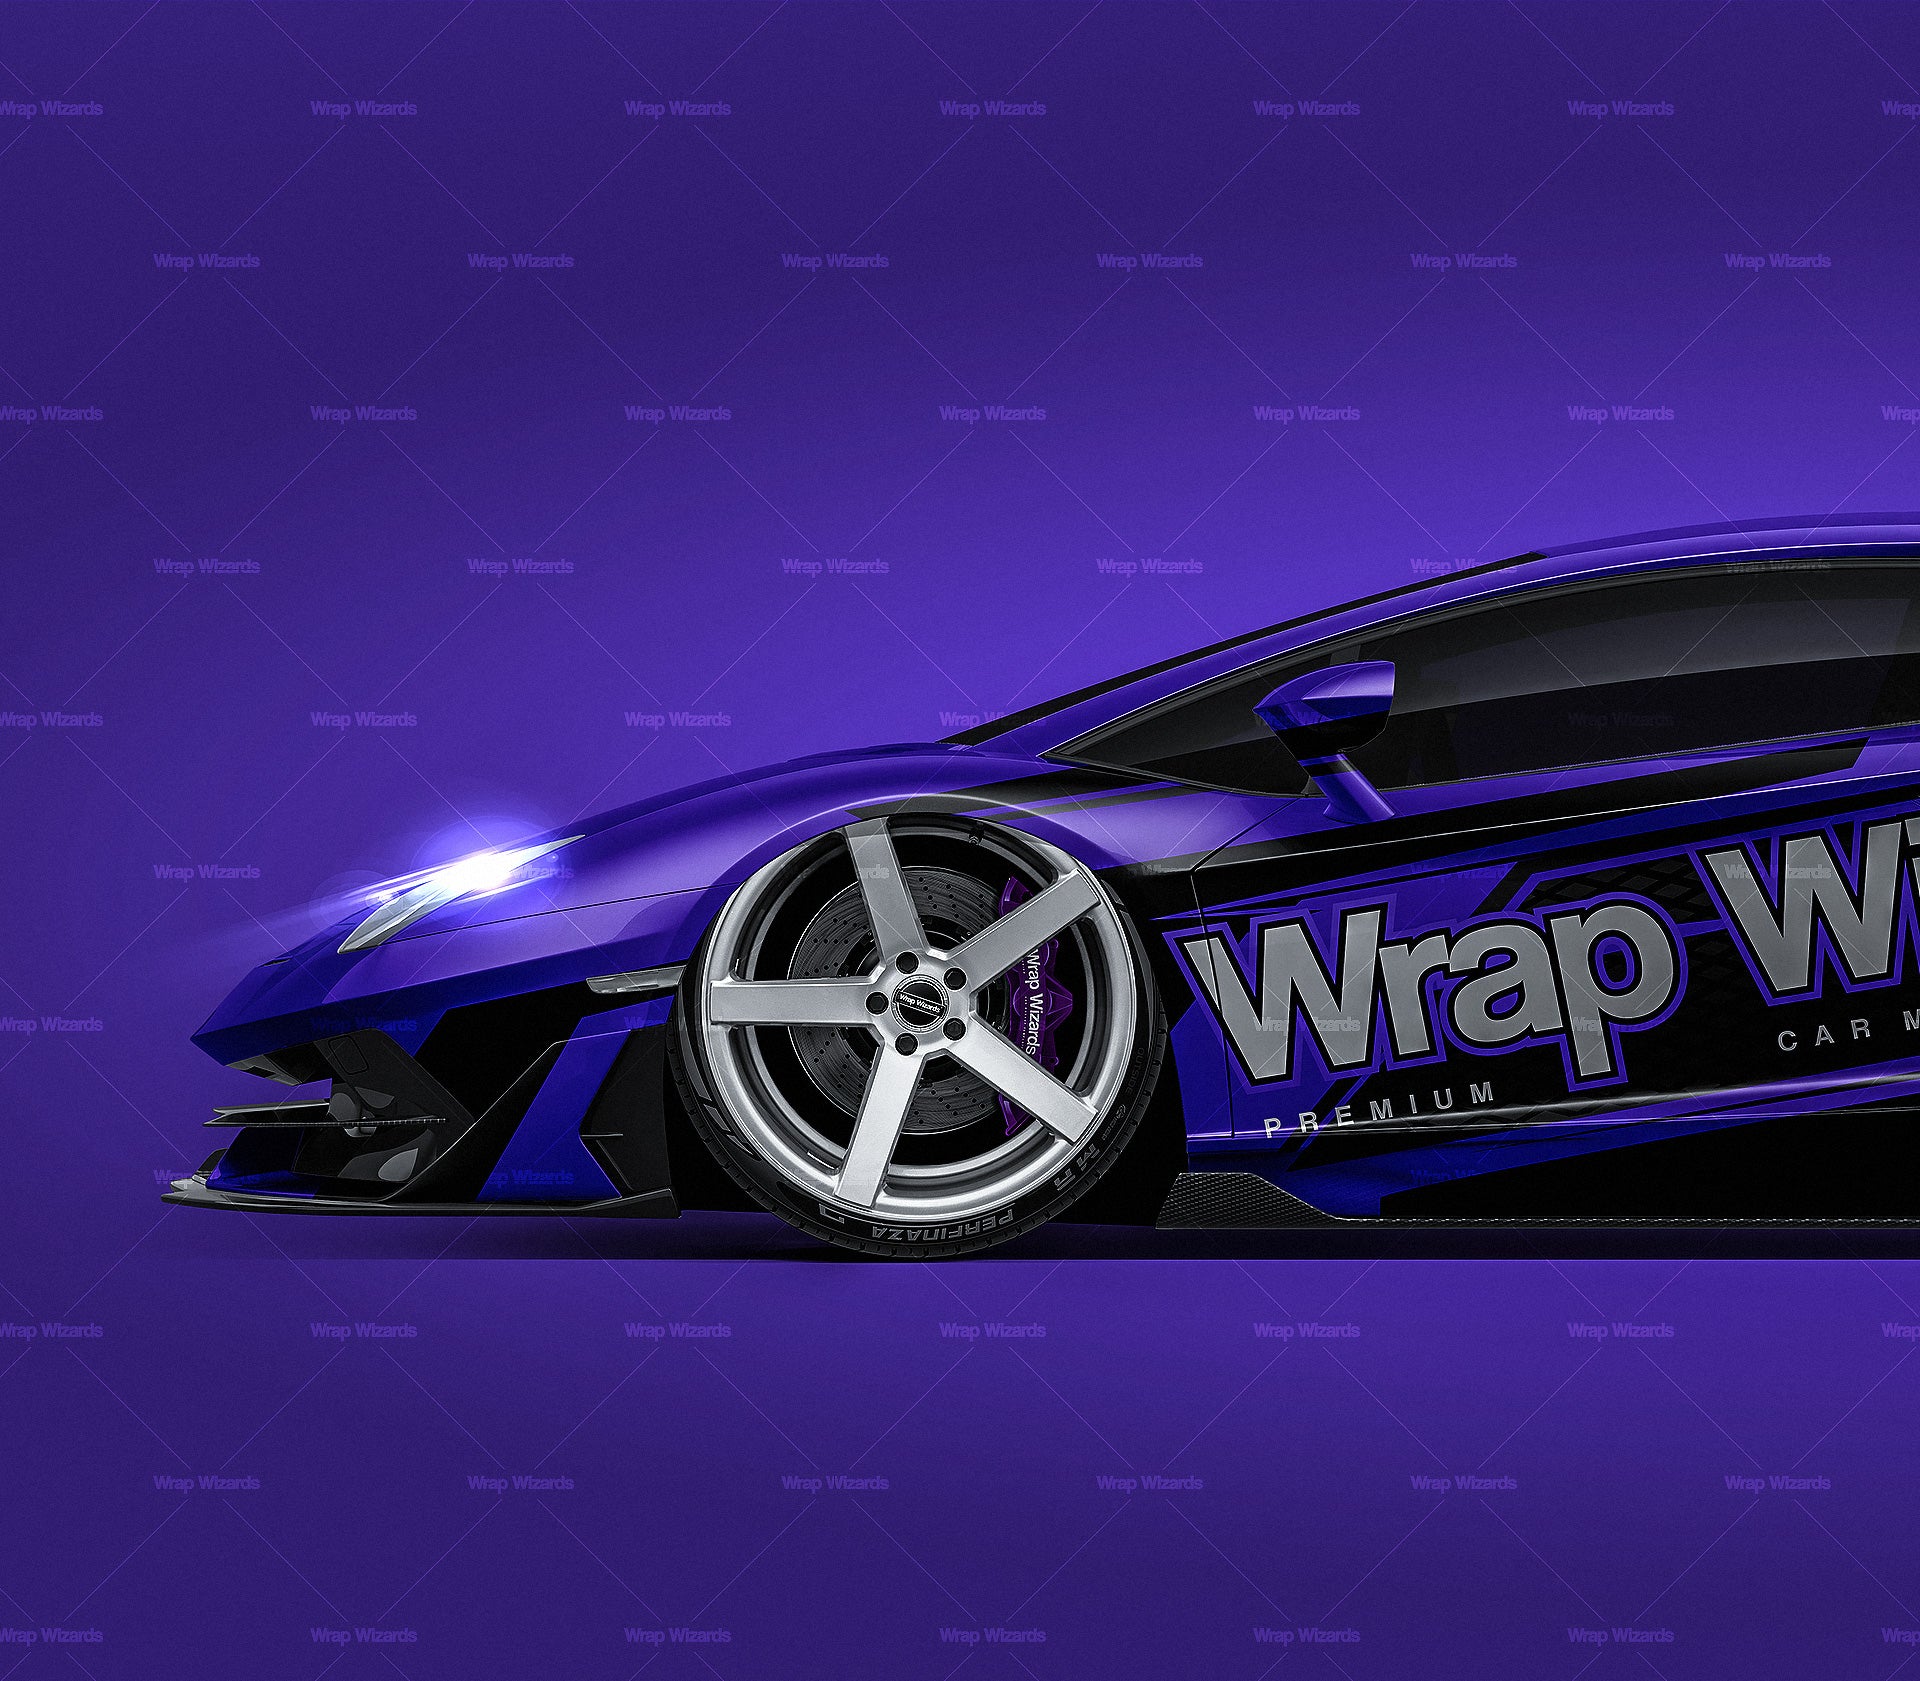 Download Lamborghini Aventador Svj 2019 Glossy Finish All Sides Car Mockup Te Wrap Wizards Com Premium Car Mockups Templates